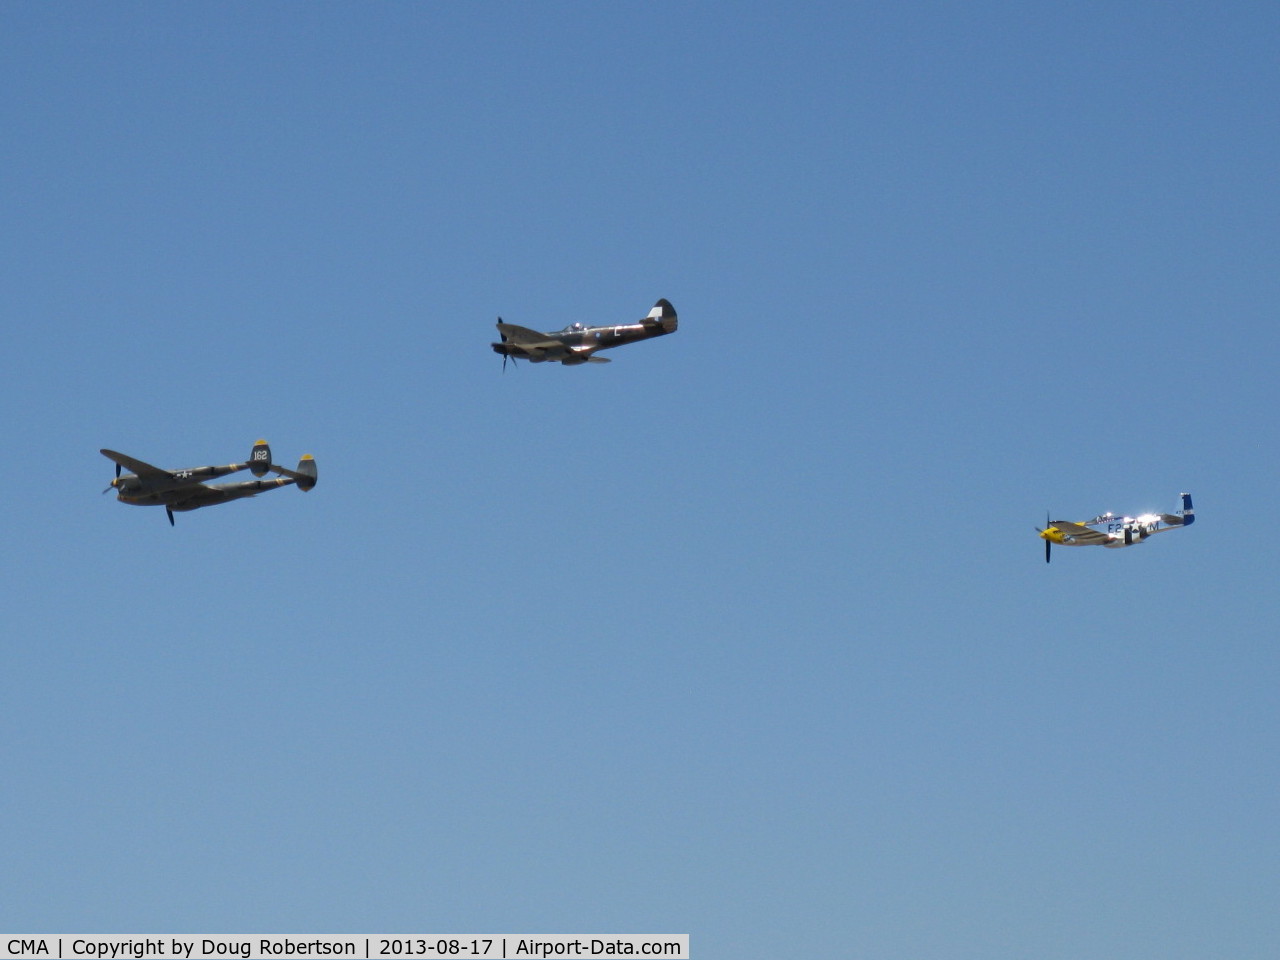 Camarillo Airport (CMA) - P-38 LIGHTNING, SPITFIRE, P-51 MUSTANG Another Flyover Rwy 26 at 2013 WINGS OVER CAMARILLO AIRSHOW